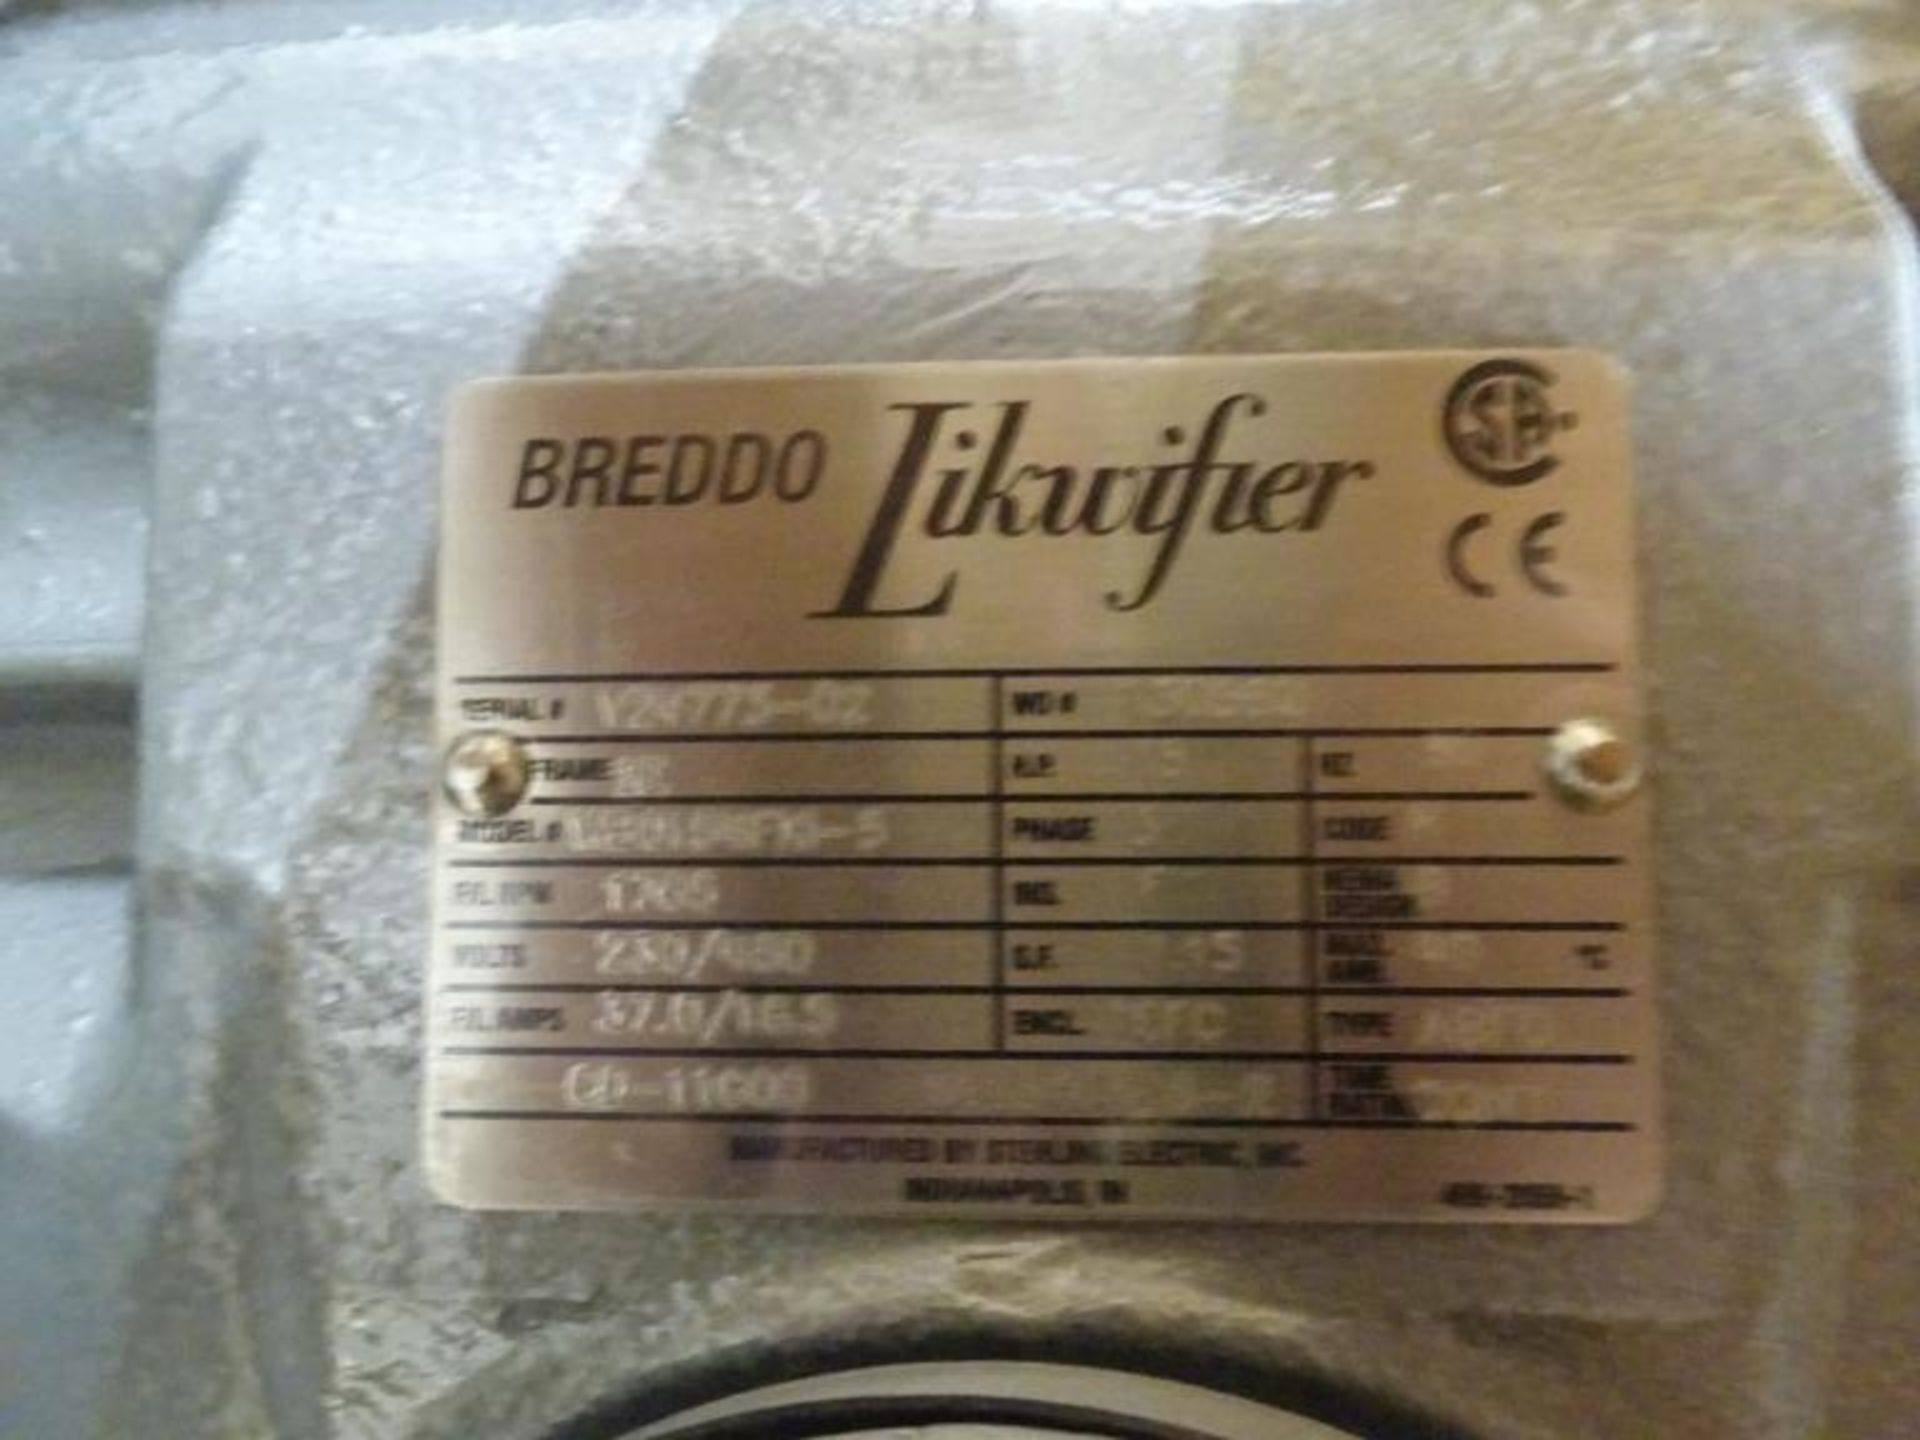 Breddo Likwifier 15HP Electric Motor - Image 6 of 6